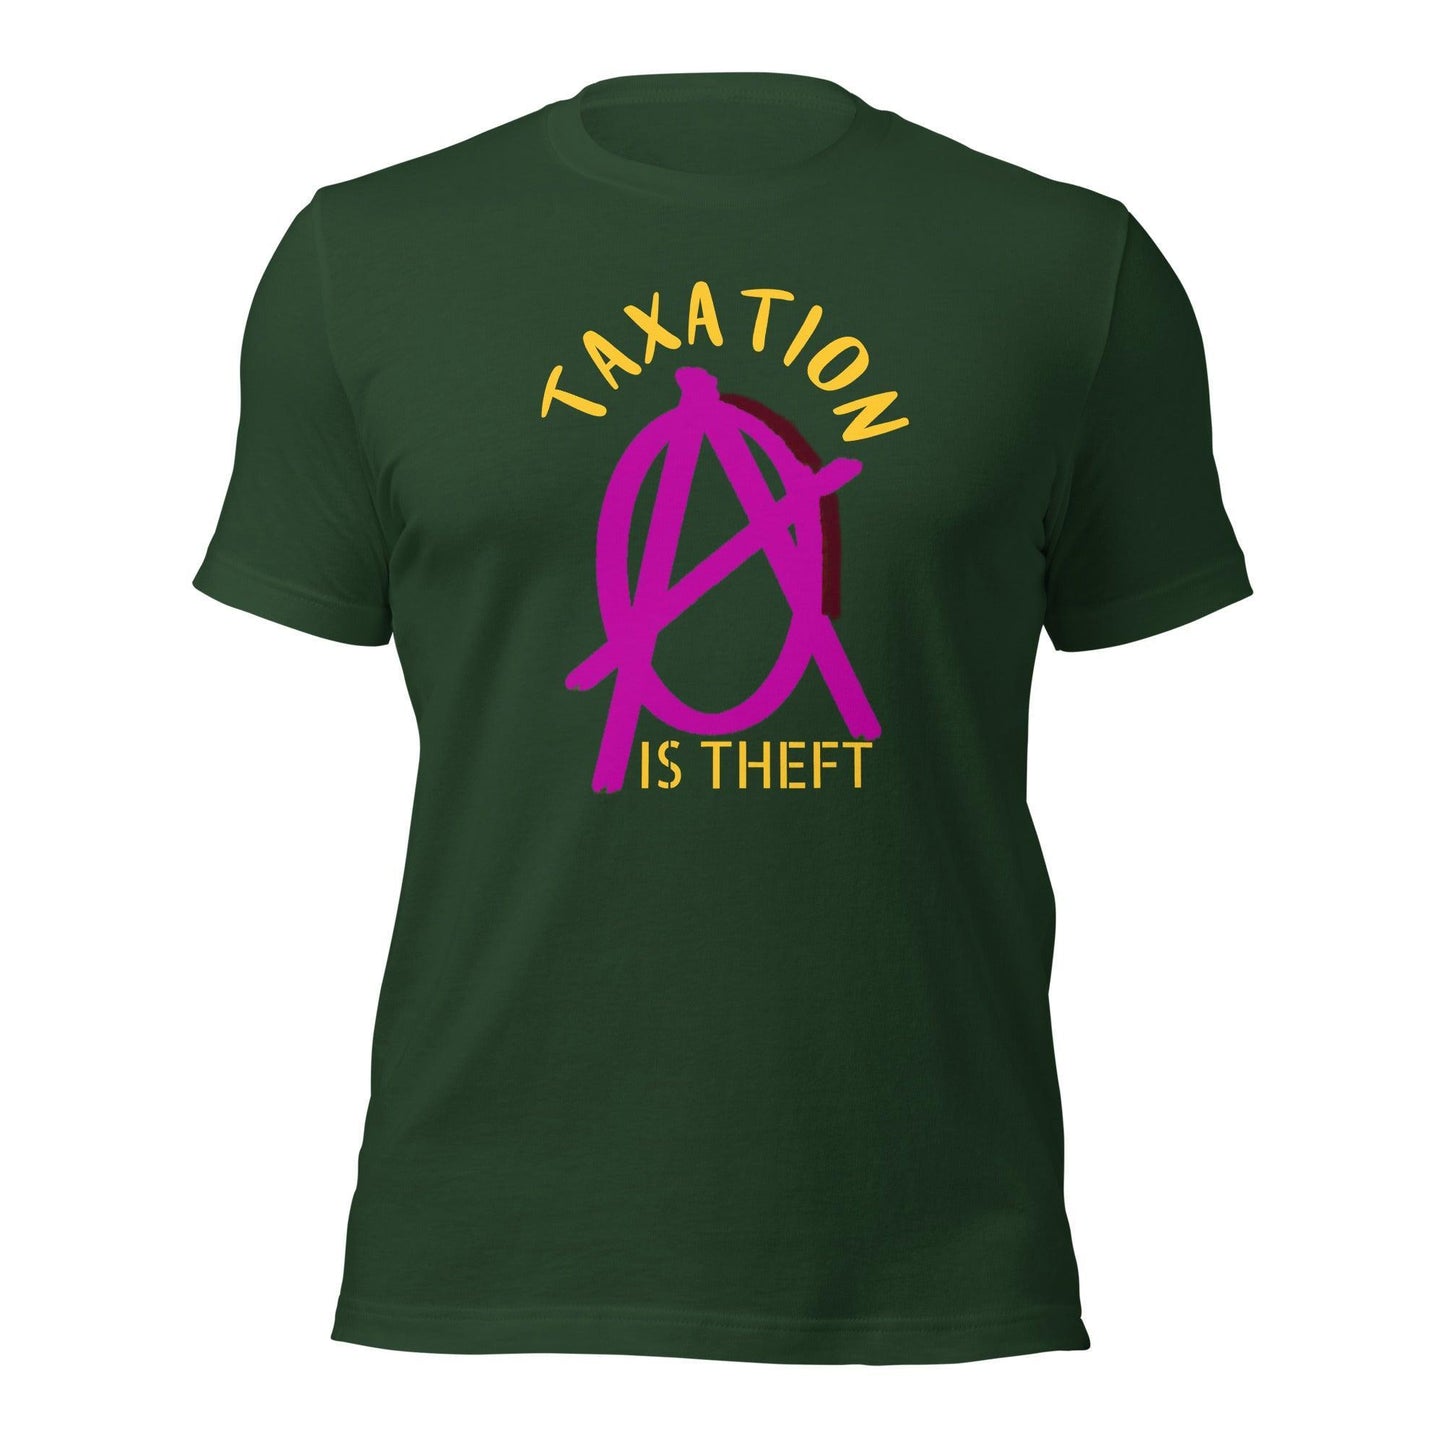 Anarchy Wear Pink "Taxation Is Theft" Unisex t-shirt - AnarchyWear